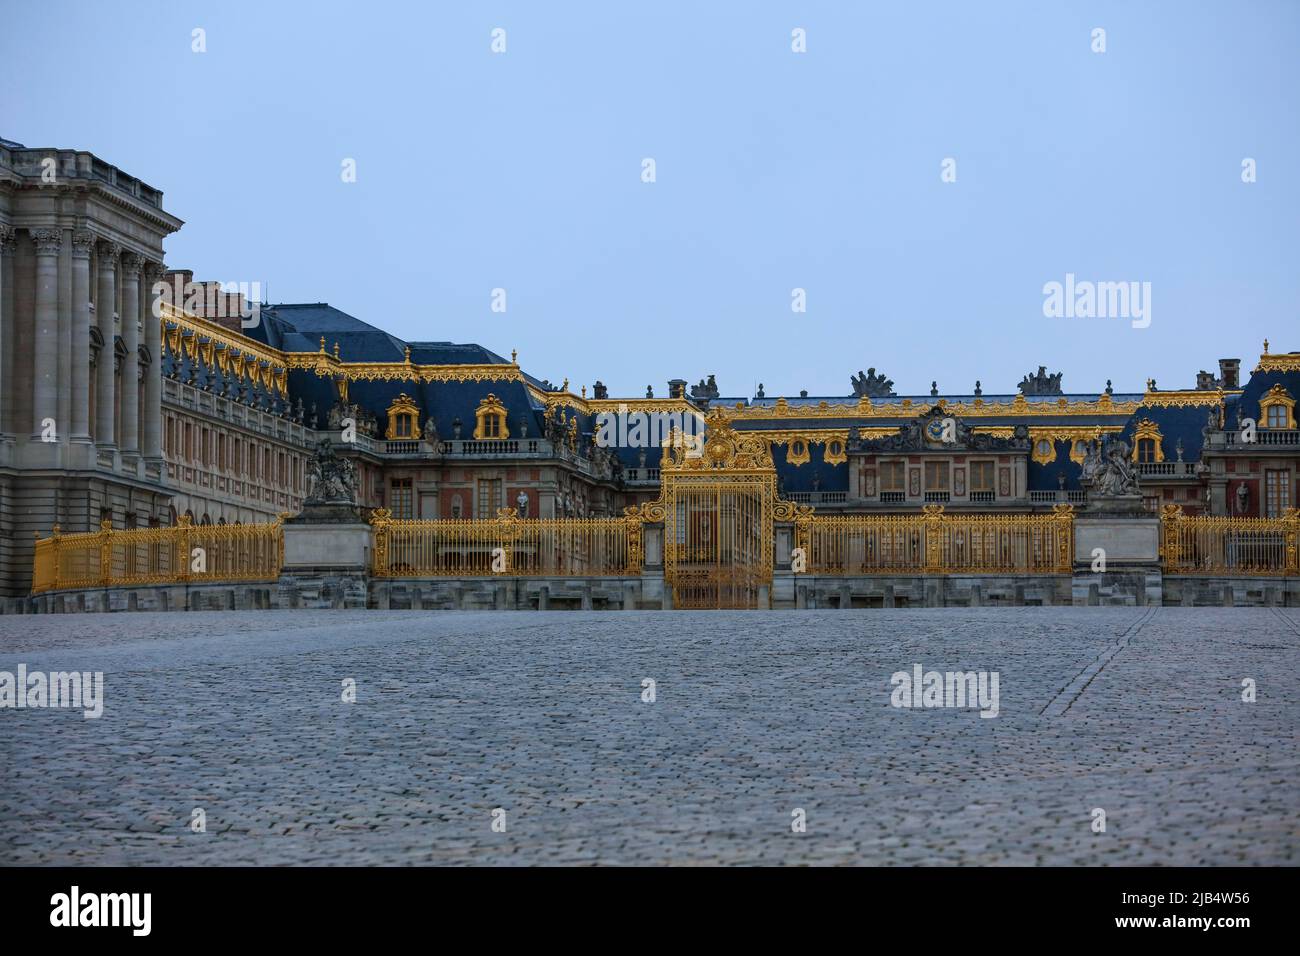 Cour royale, baroque Chateau de Versailles, former palace of the kings of France, near Paris, Yvelines department, Ile de France region, France Stock Photo